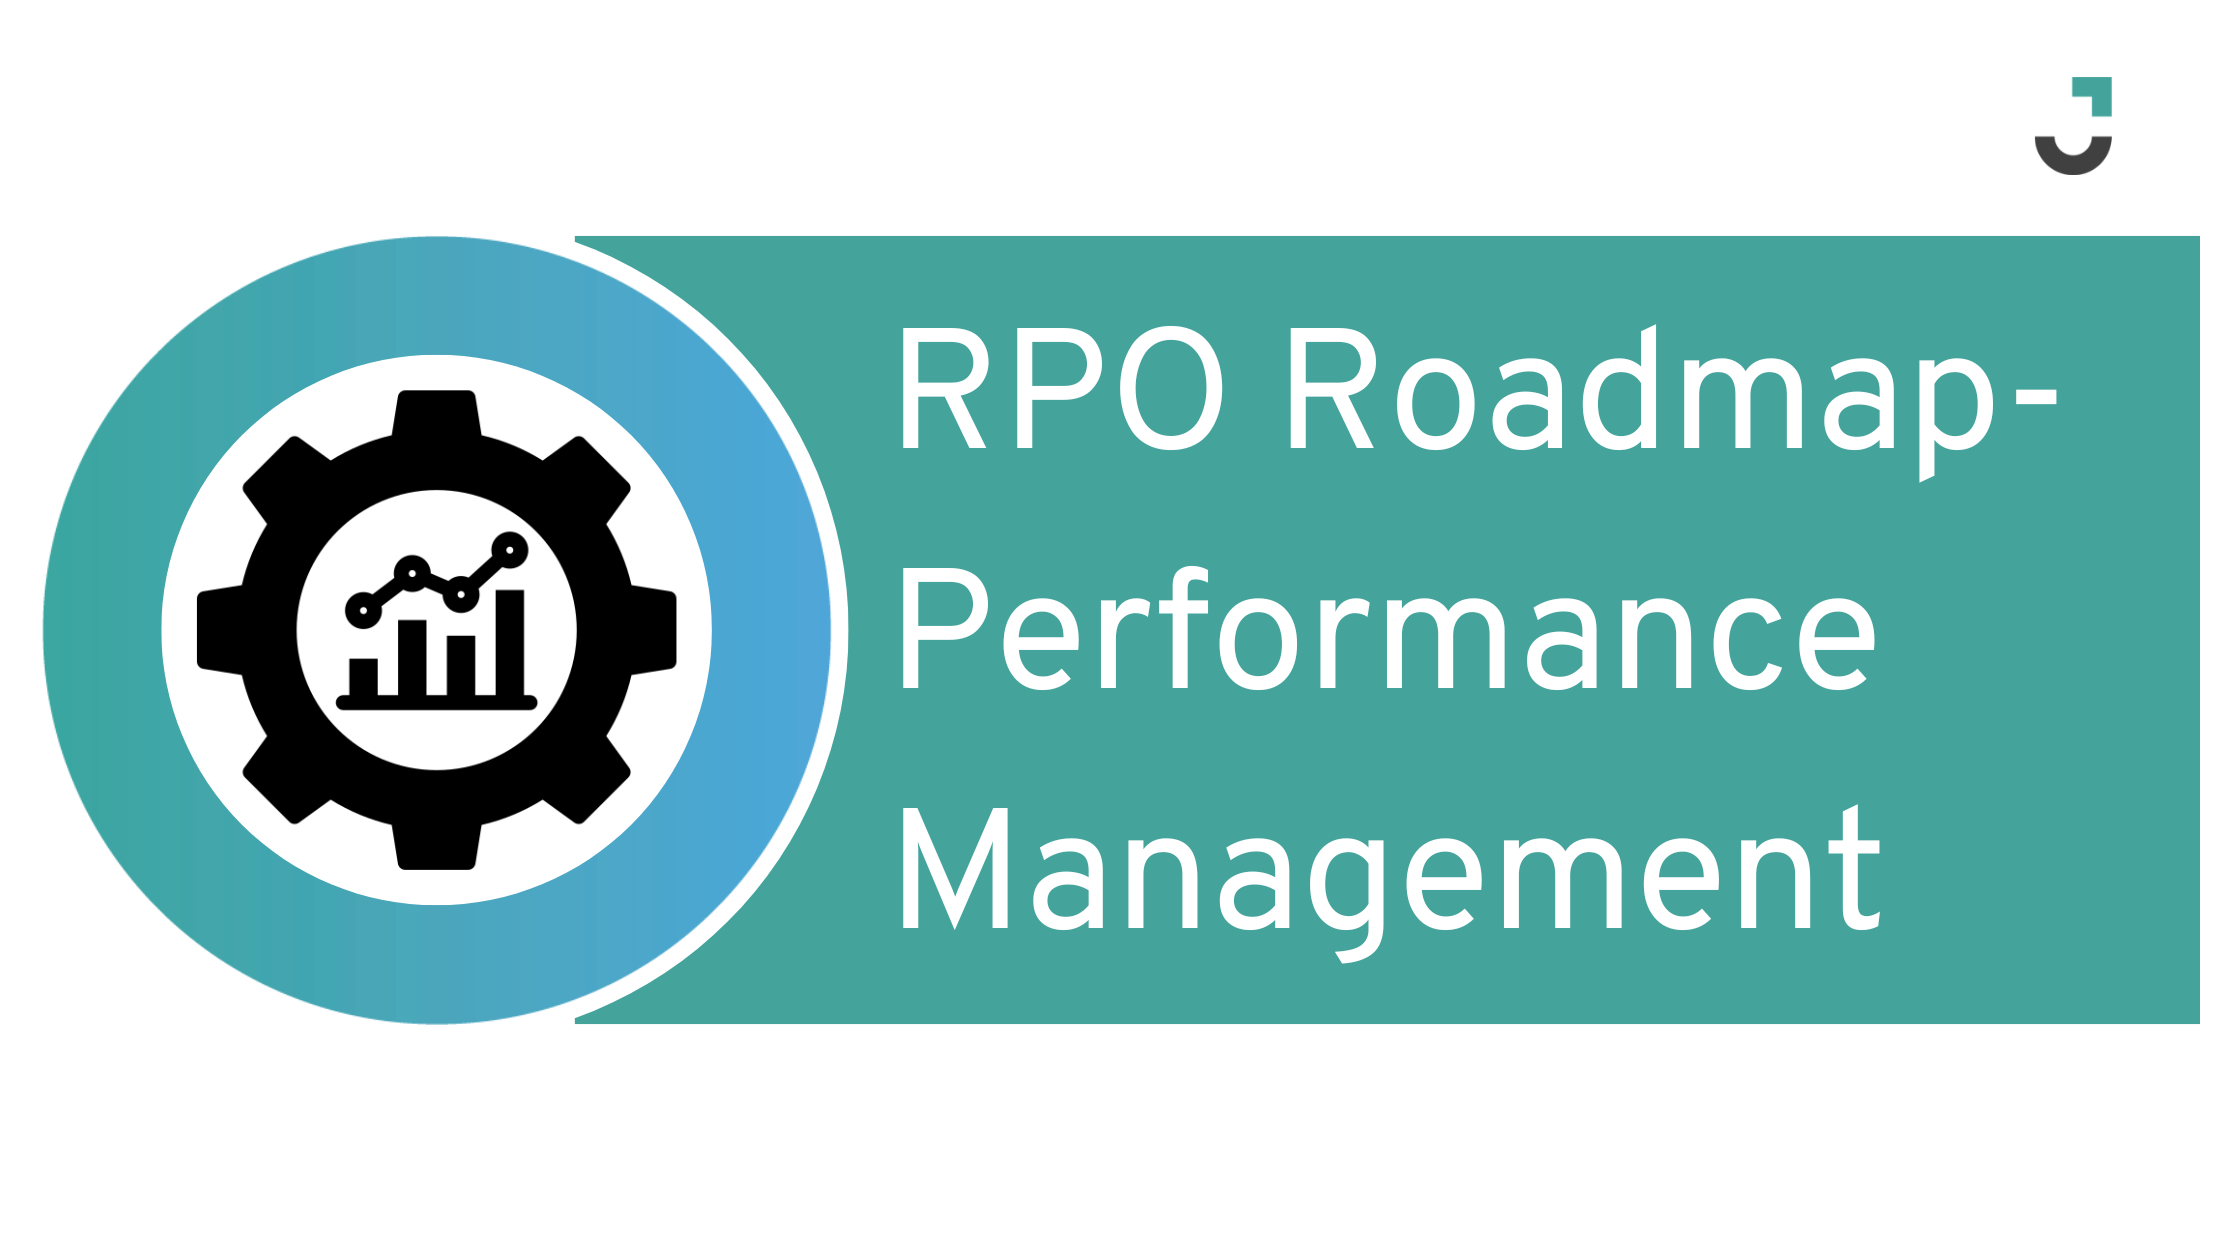 RPO Roadmap- Performance Management